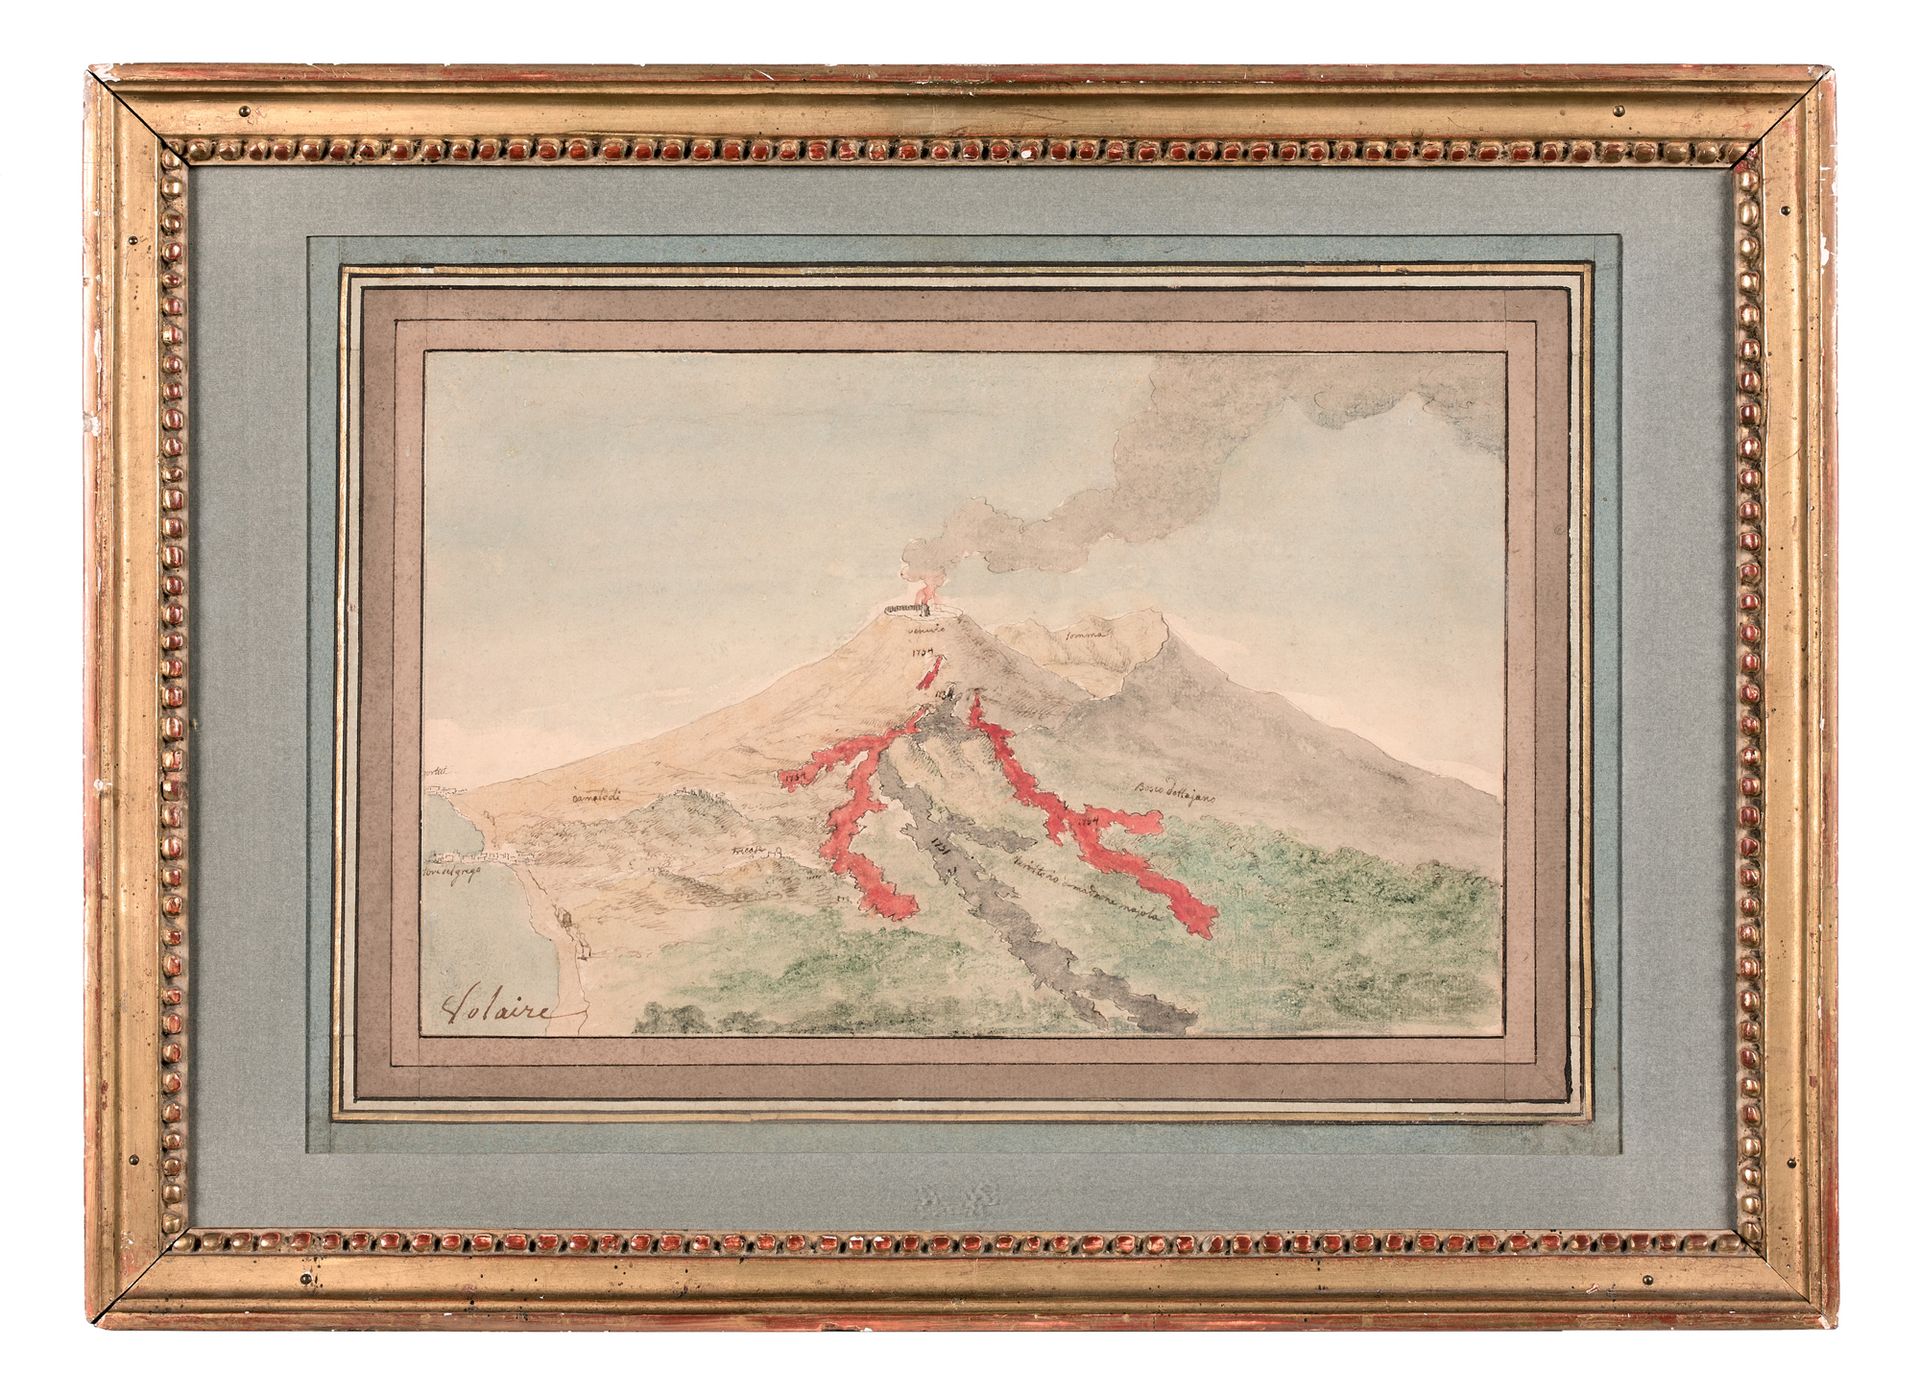 Ignace VERNET (Avignon 1726 - Naples après 1770) 维苏威火山的爆发
钢笔和灰墨水，水彩画。
19 x 30厘米
&hellip;